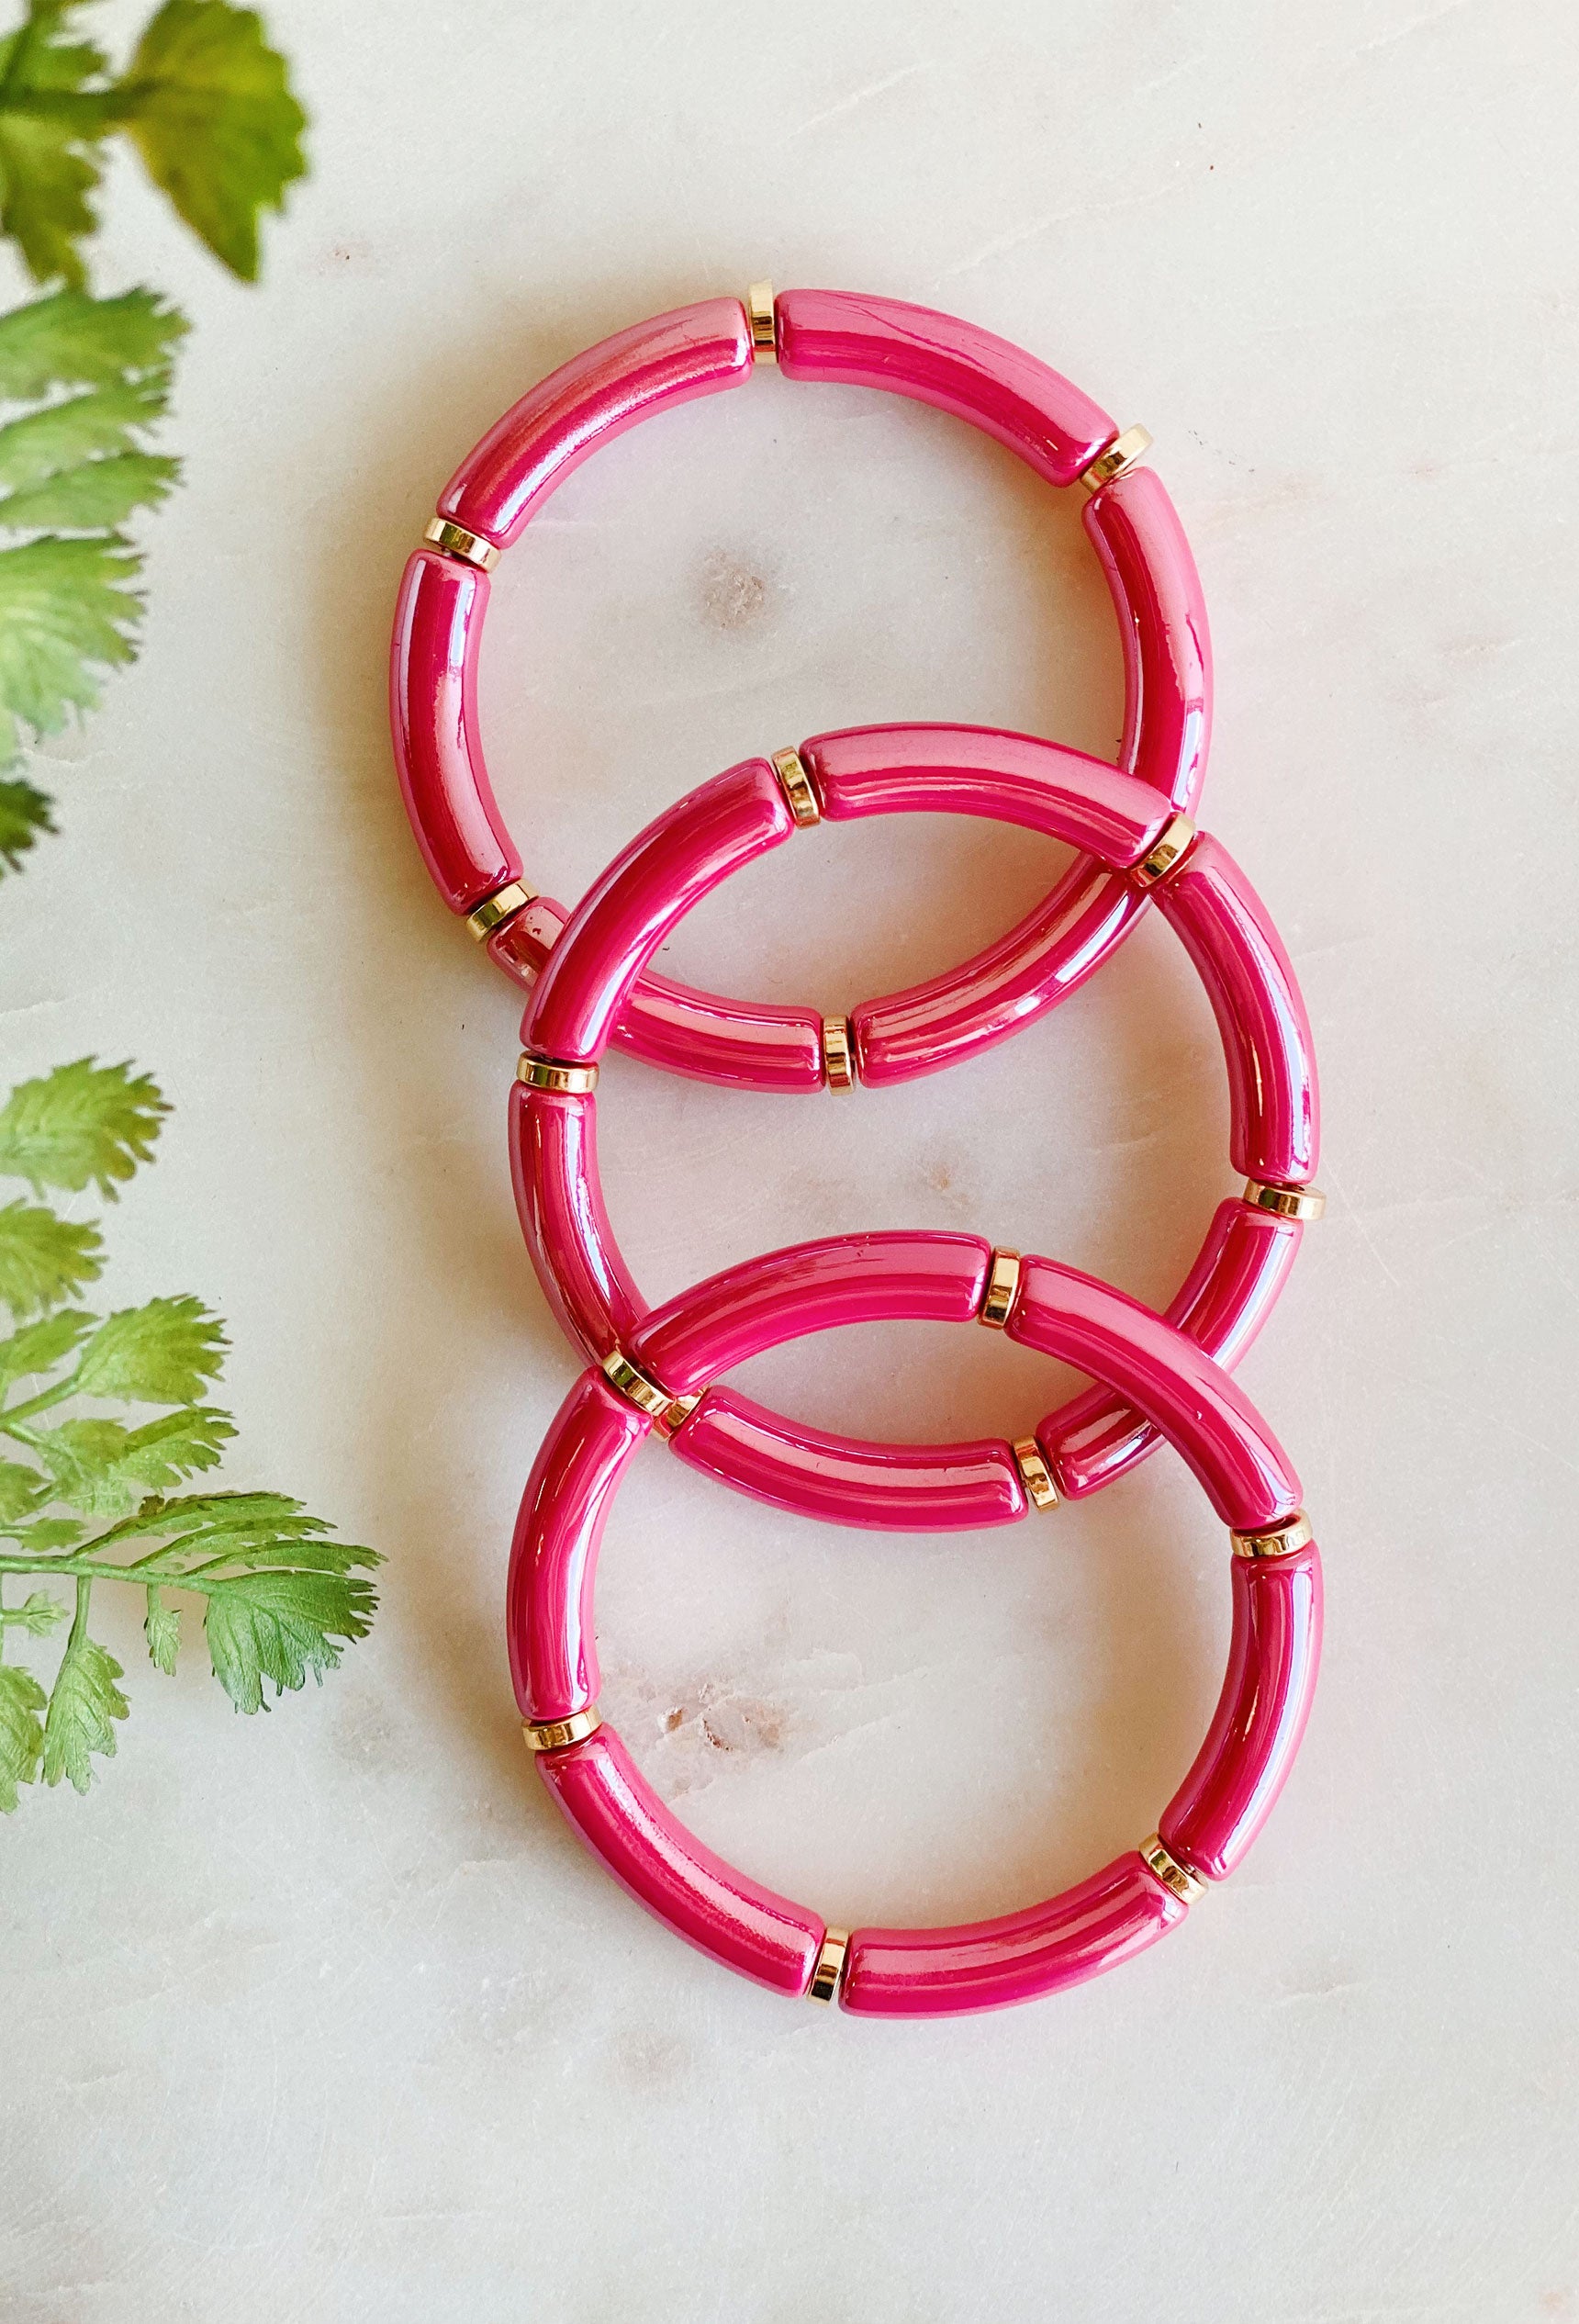 Summer Feelings Bracelet Set in Fuchsia, set of three fuchsia colored bracelet set of 3